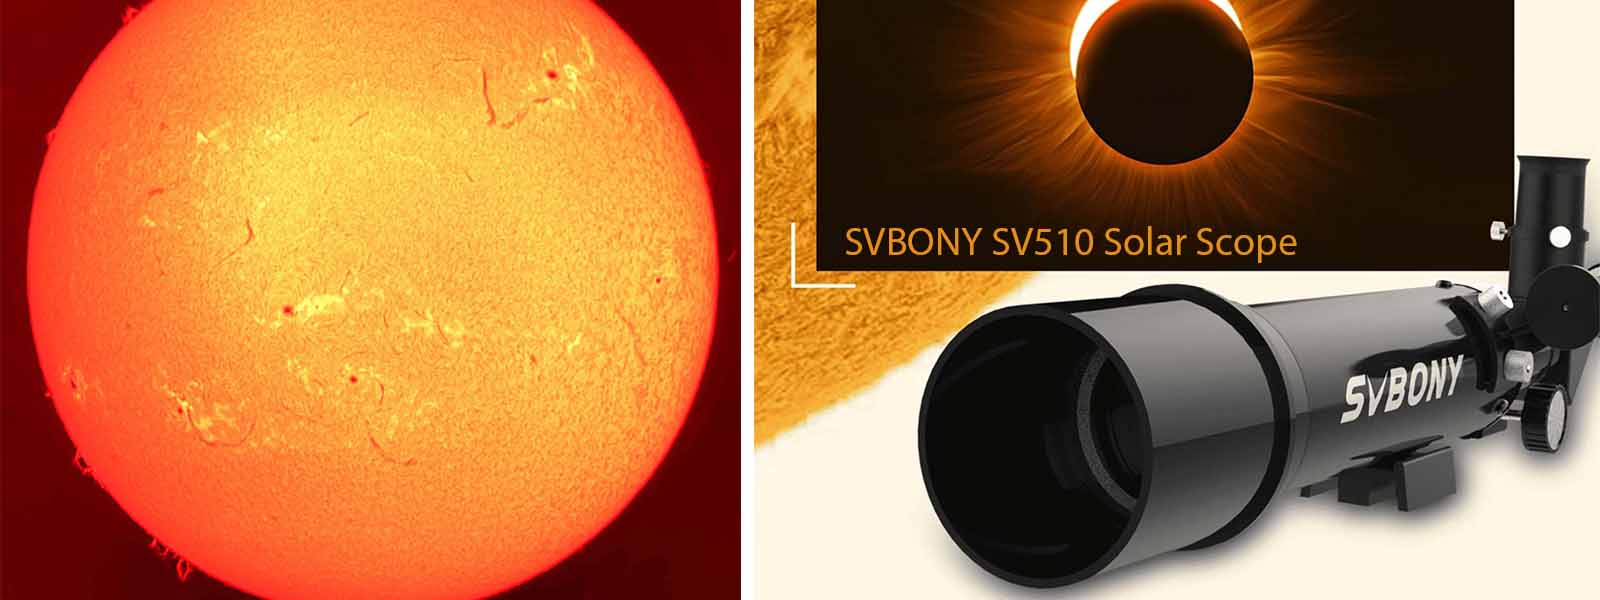 sv510 Solar scope with blocking filter.jpg